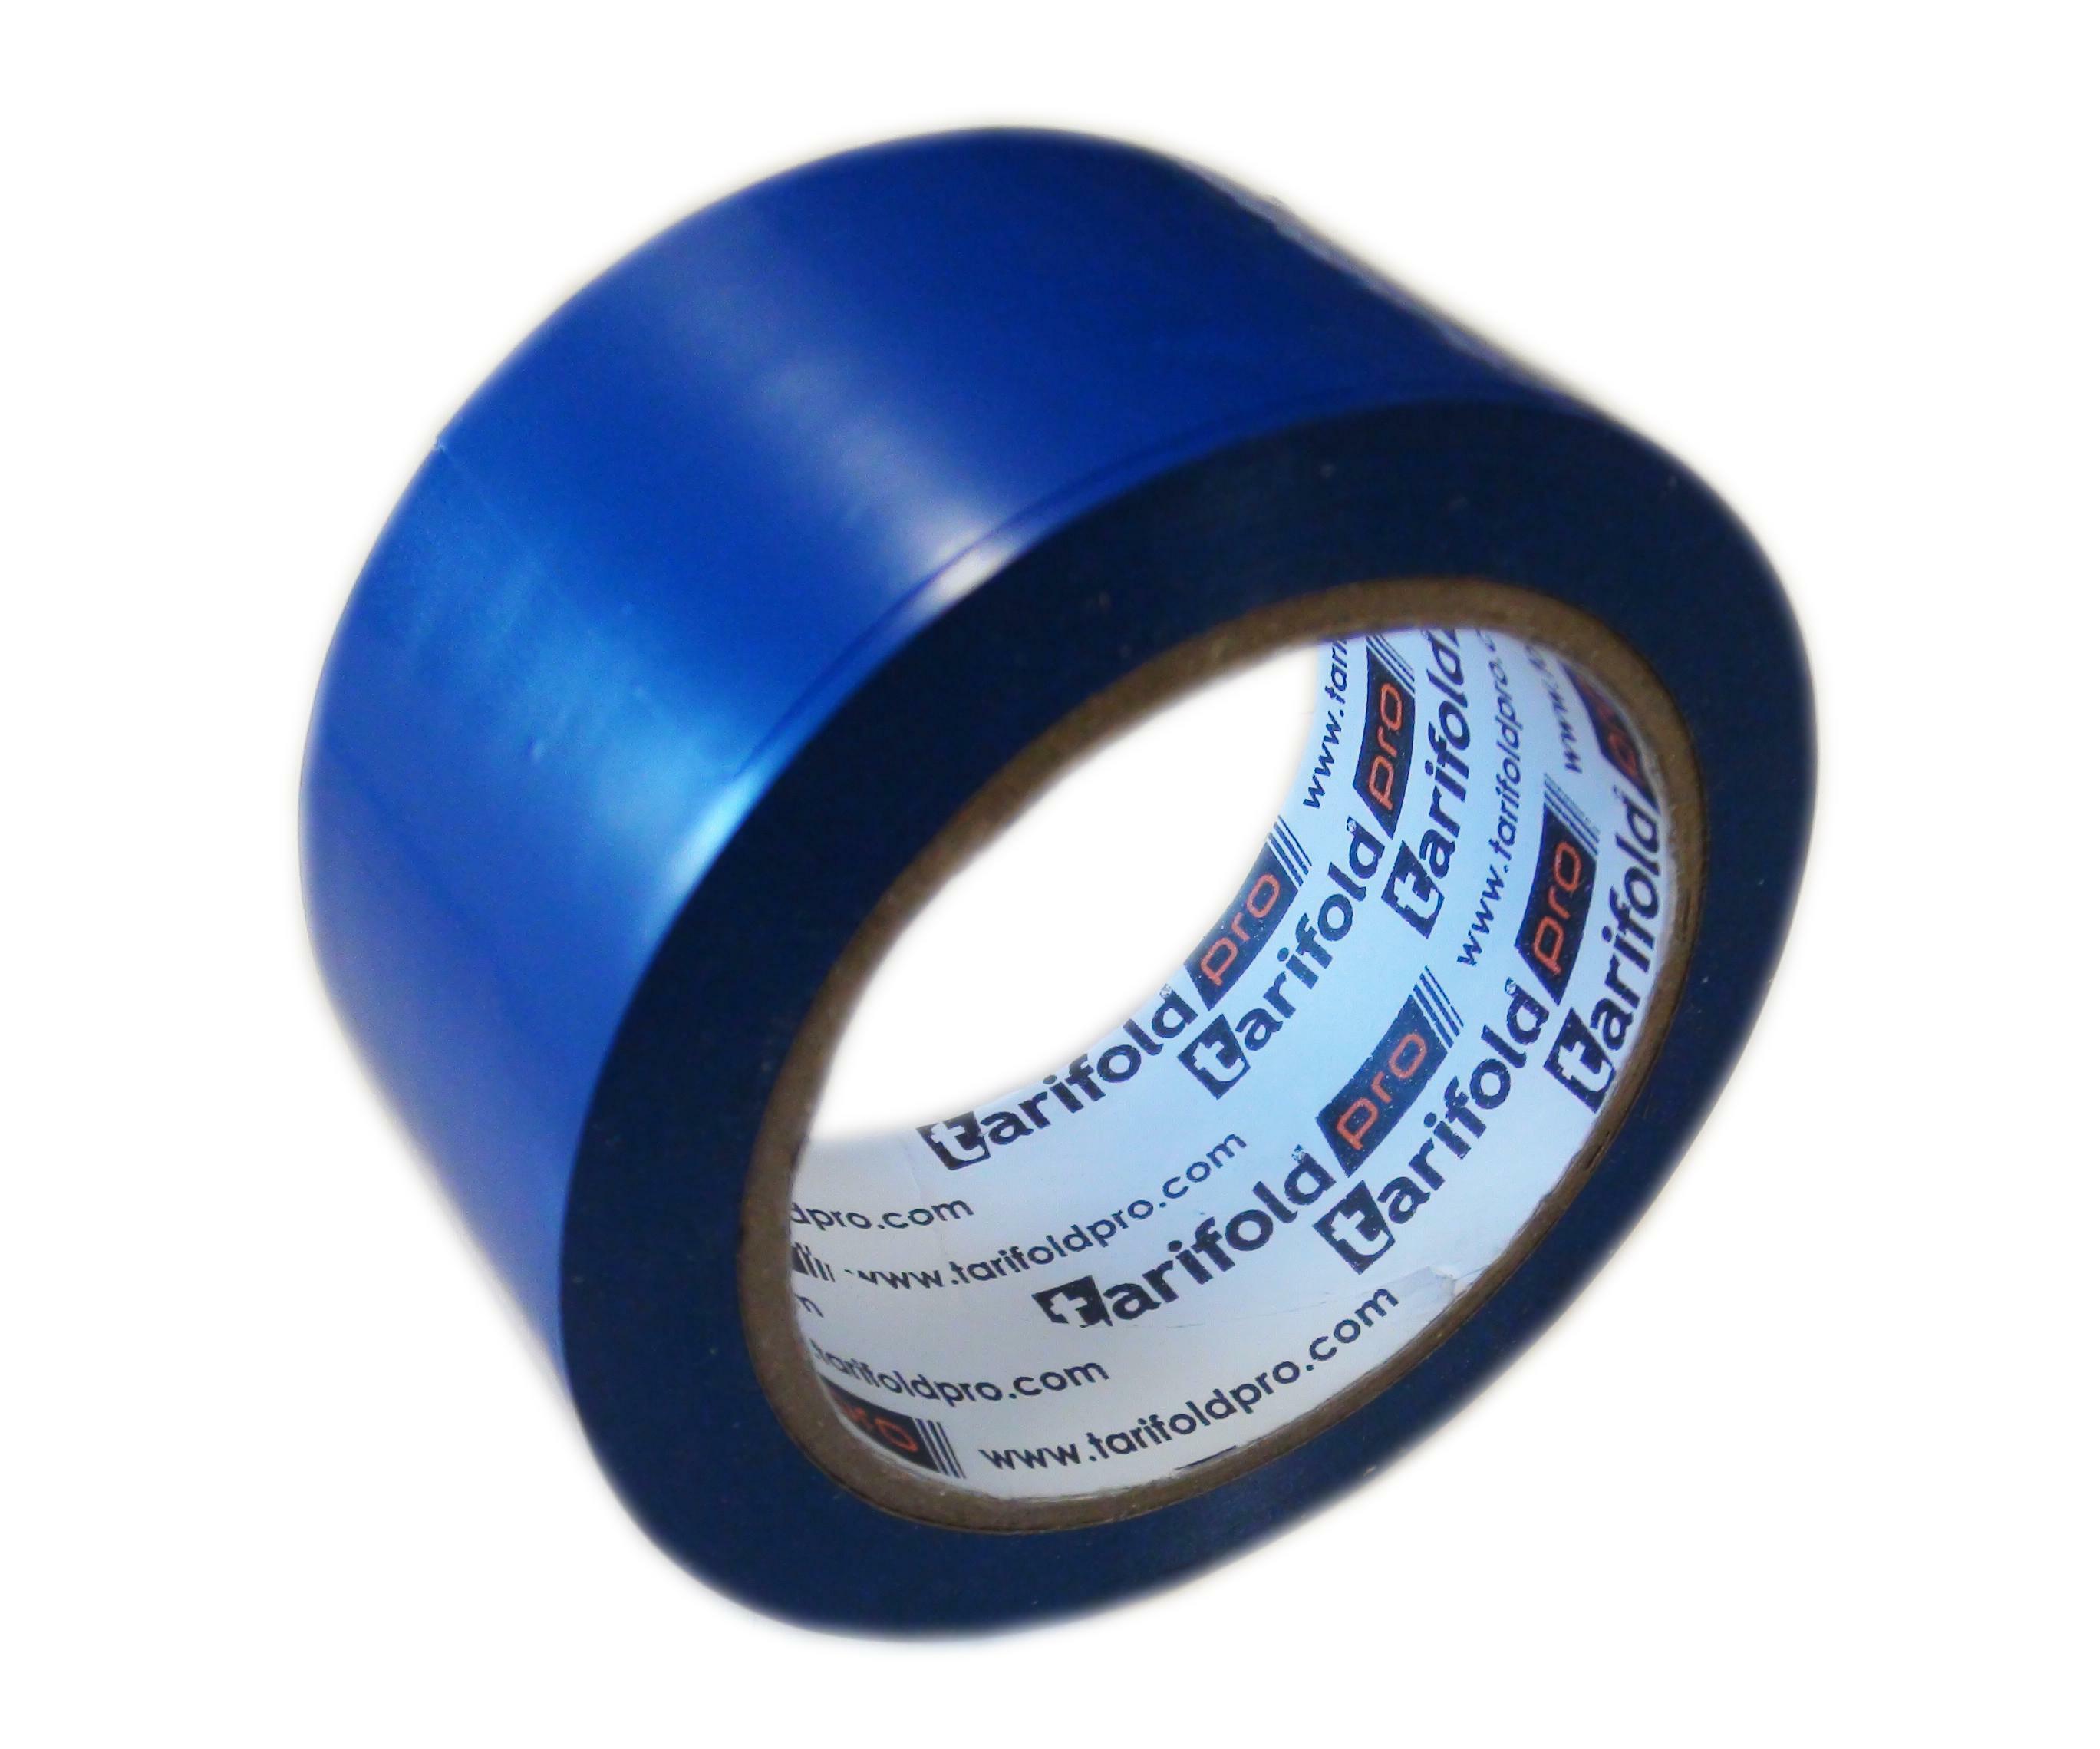 Podlahová označovací páska TARIFOLD PVC 130mi, 50 mm x 33 m modrá